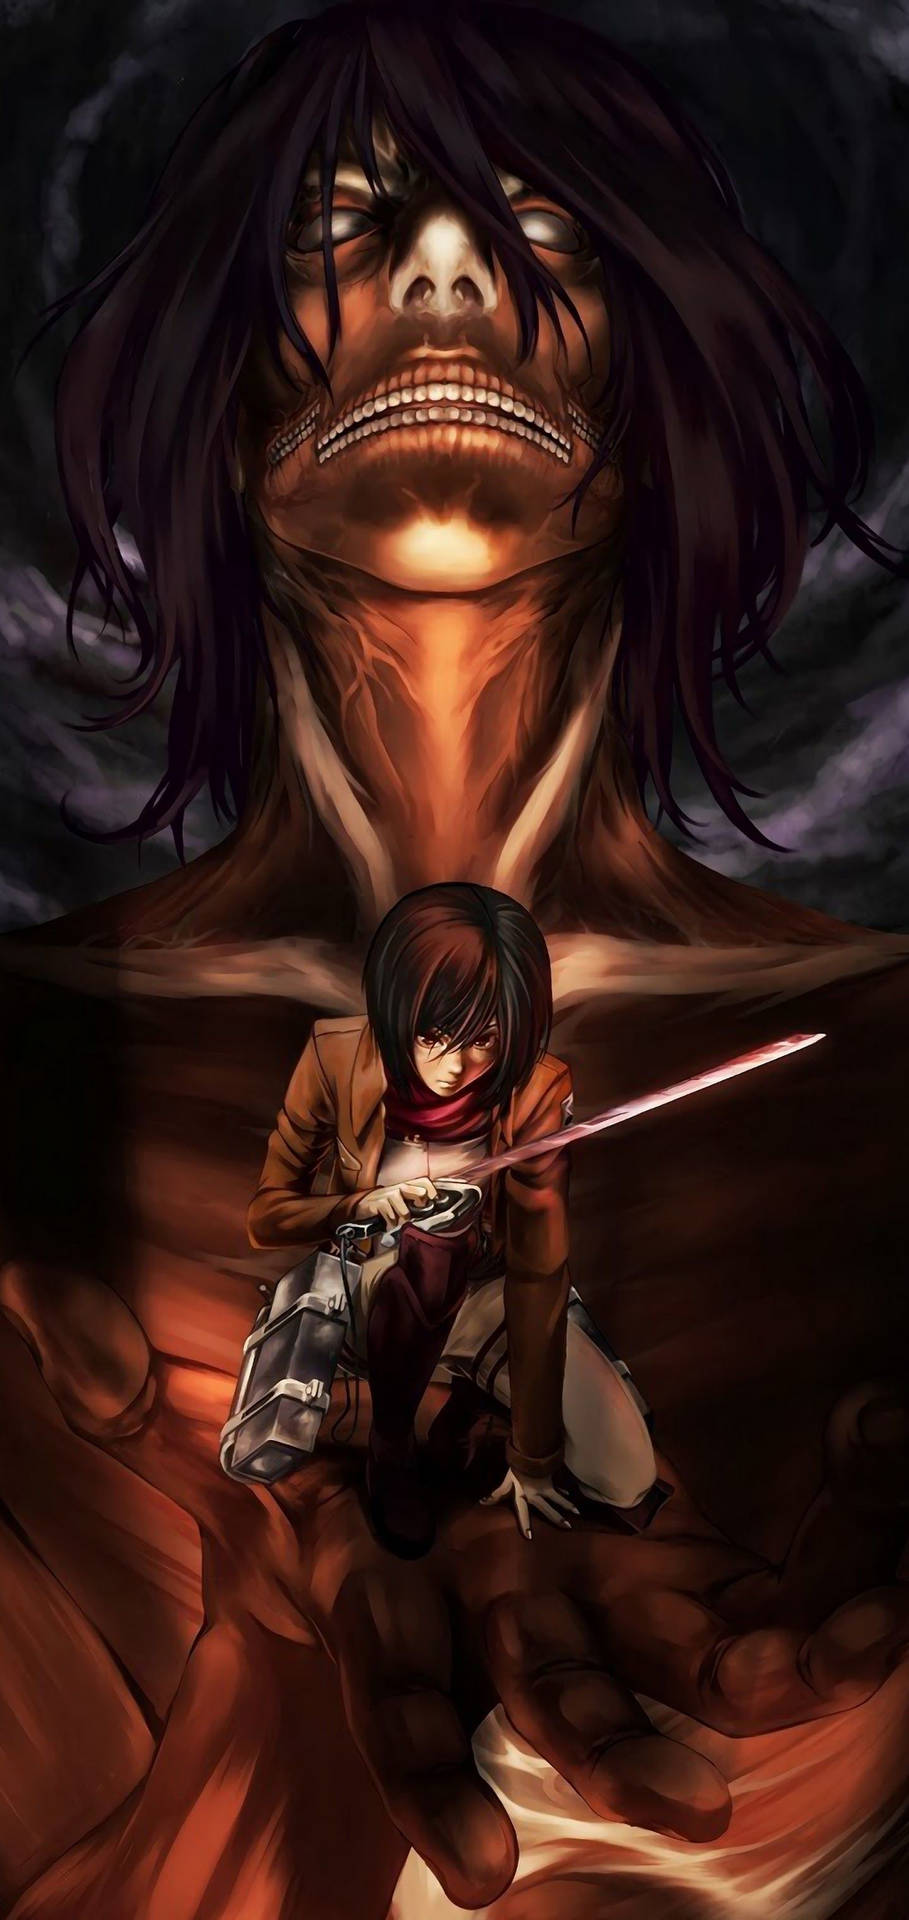 Mikasa Attack On Titan iPhone Wallpaper